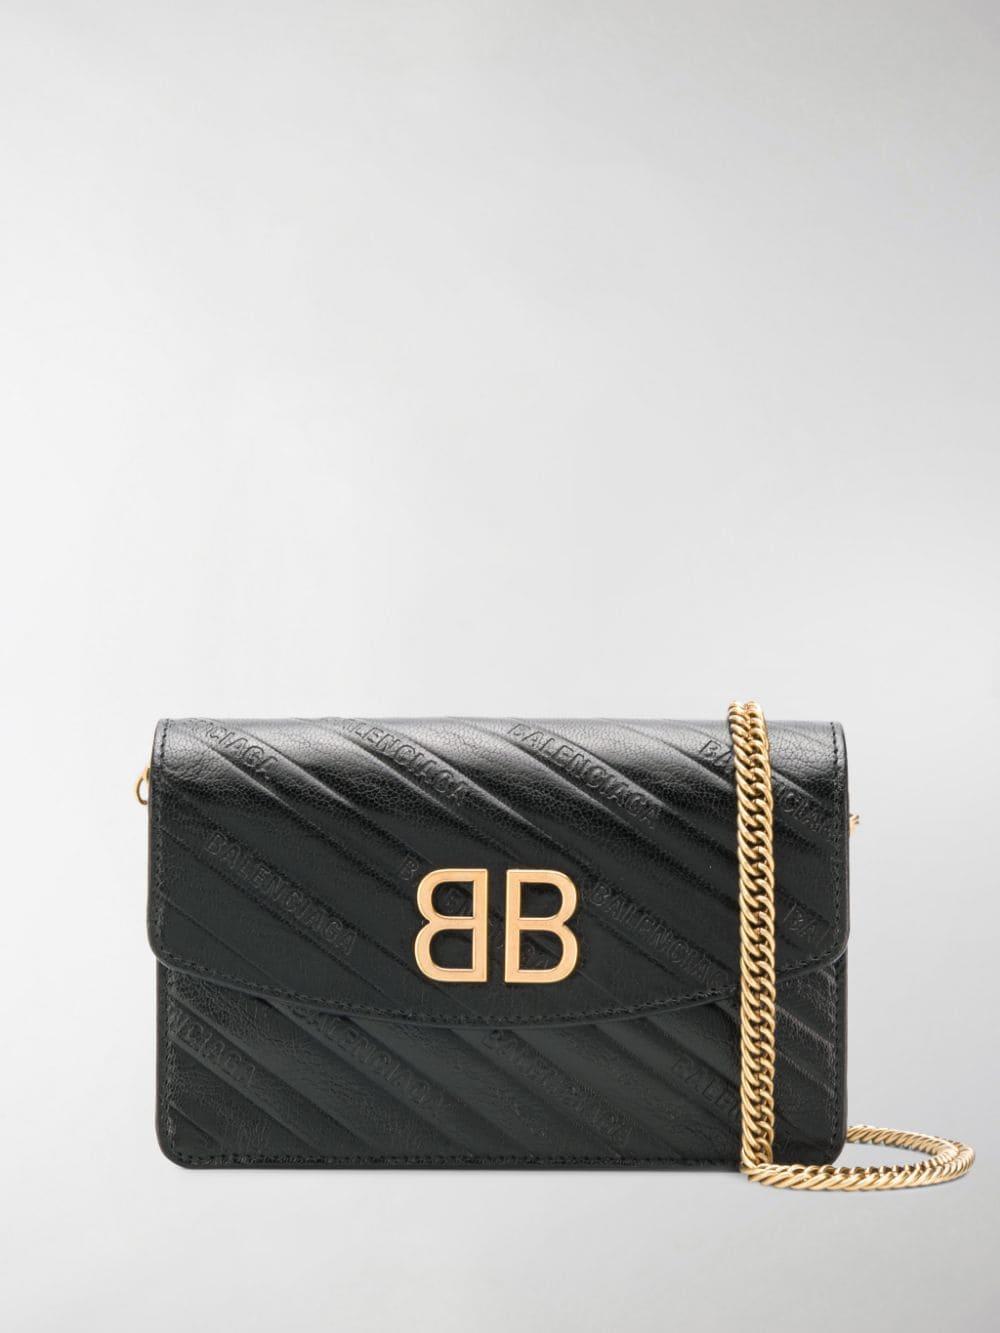 Balenciaga Bb Chain Quilted Bag in Black - Lyst